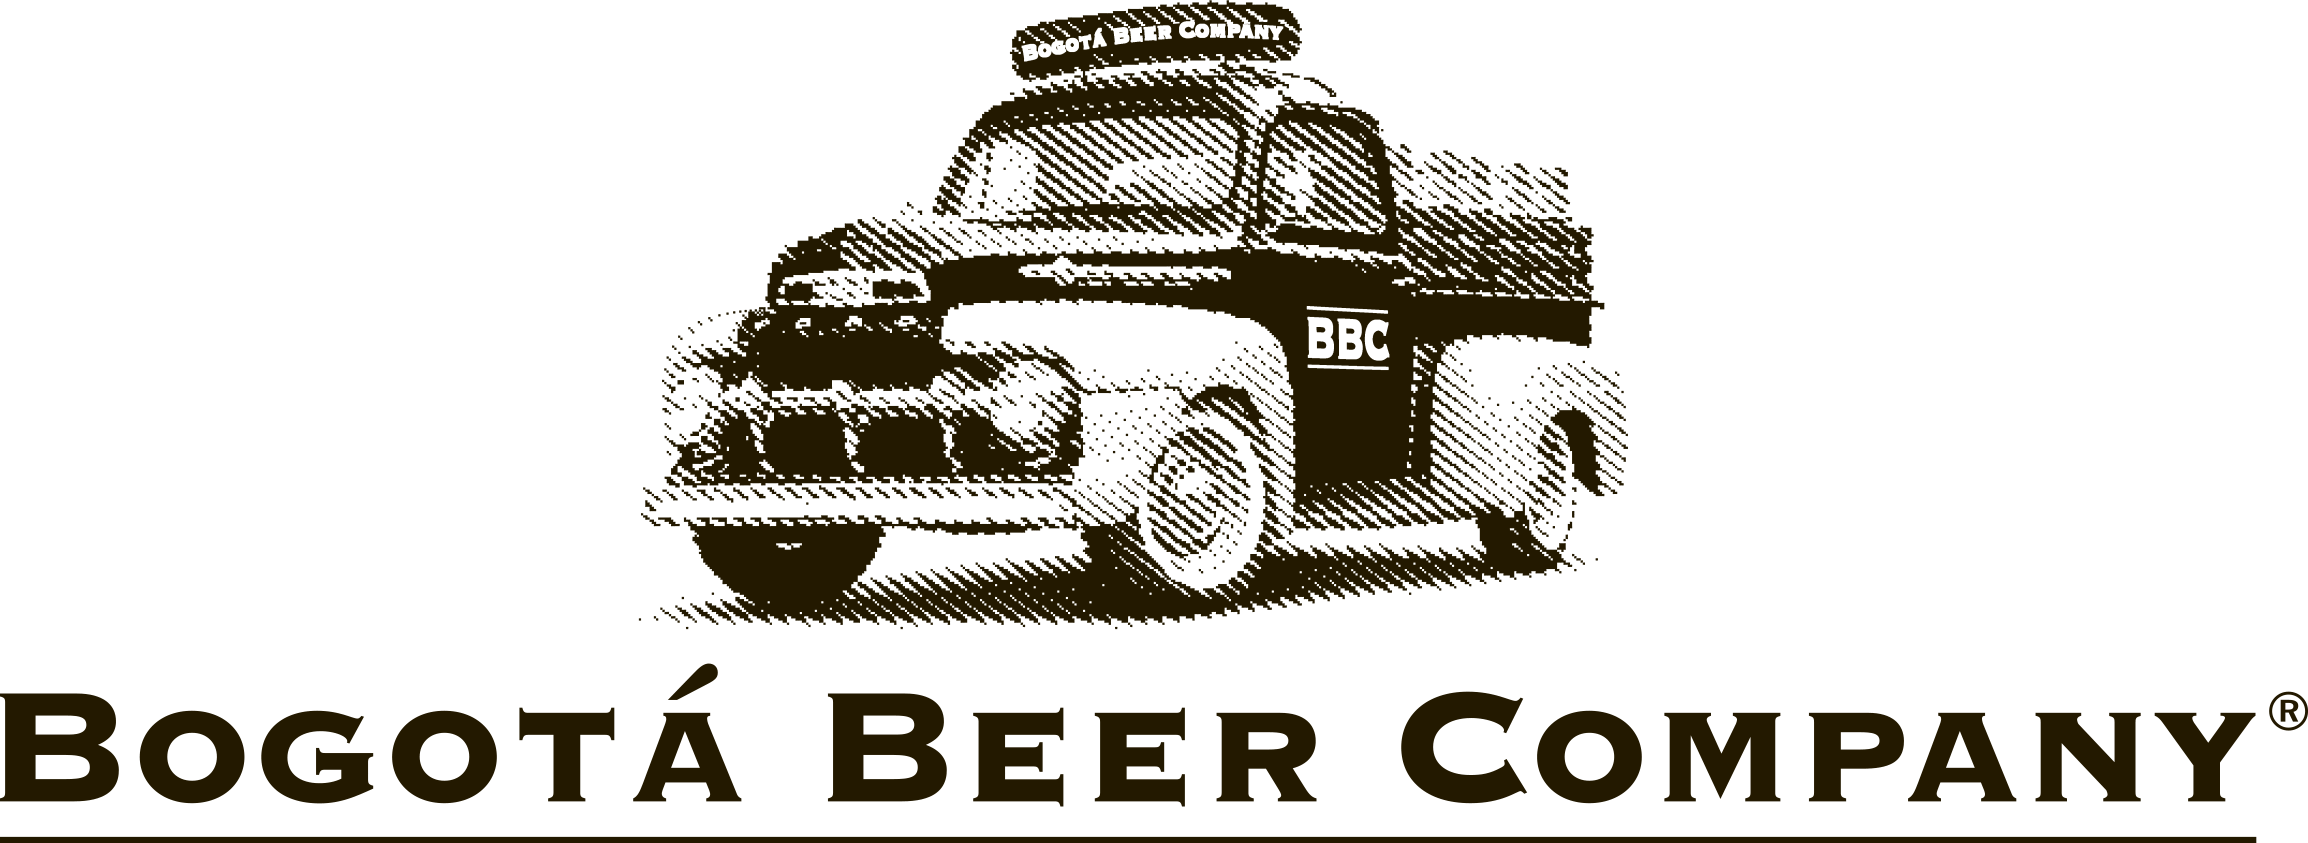 Bogotá Beer Company Logo